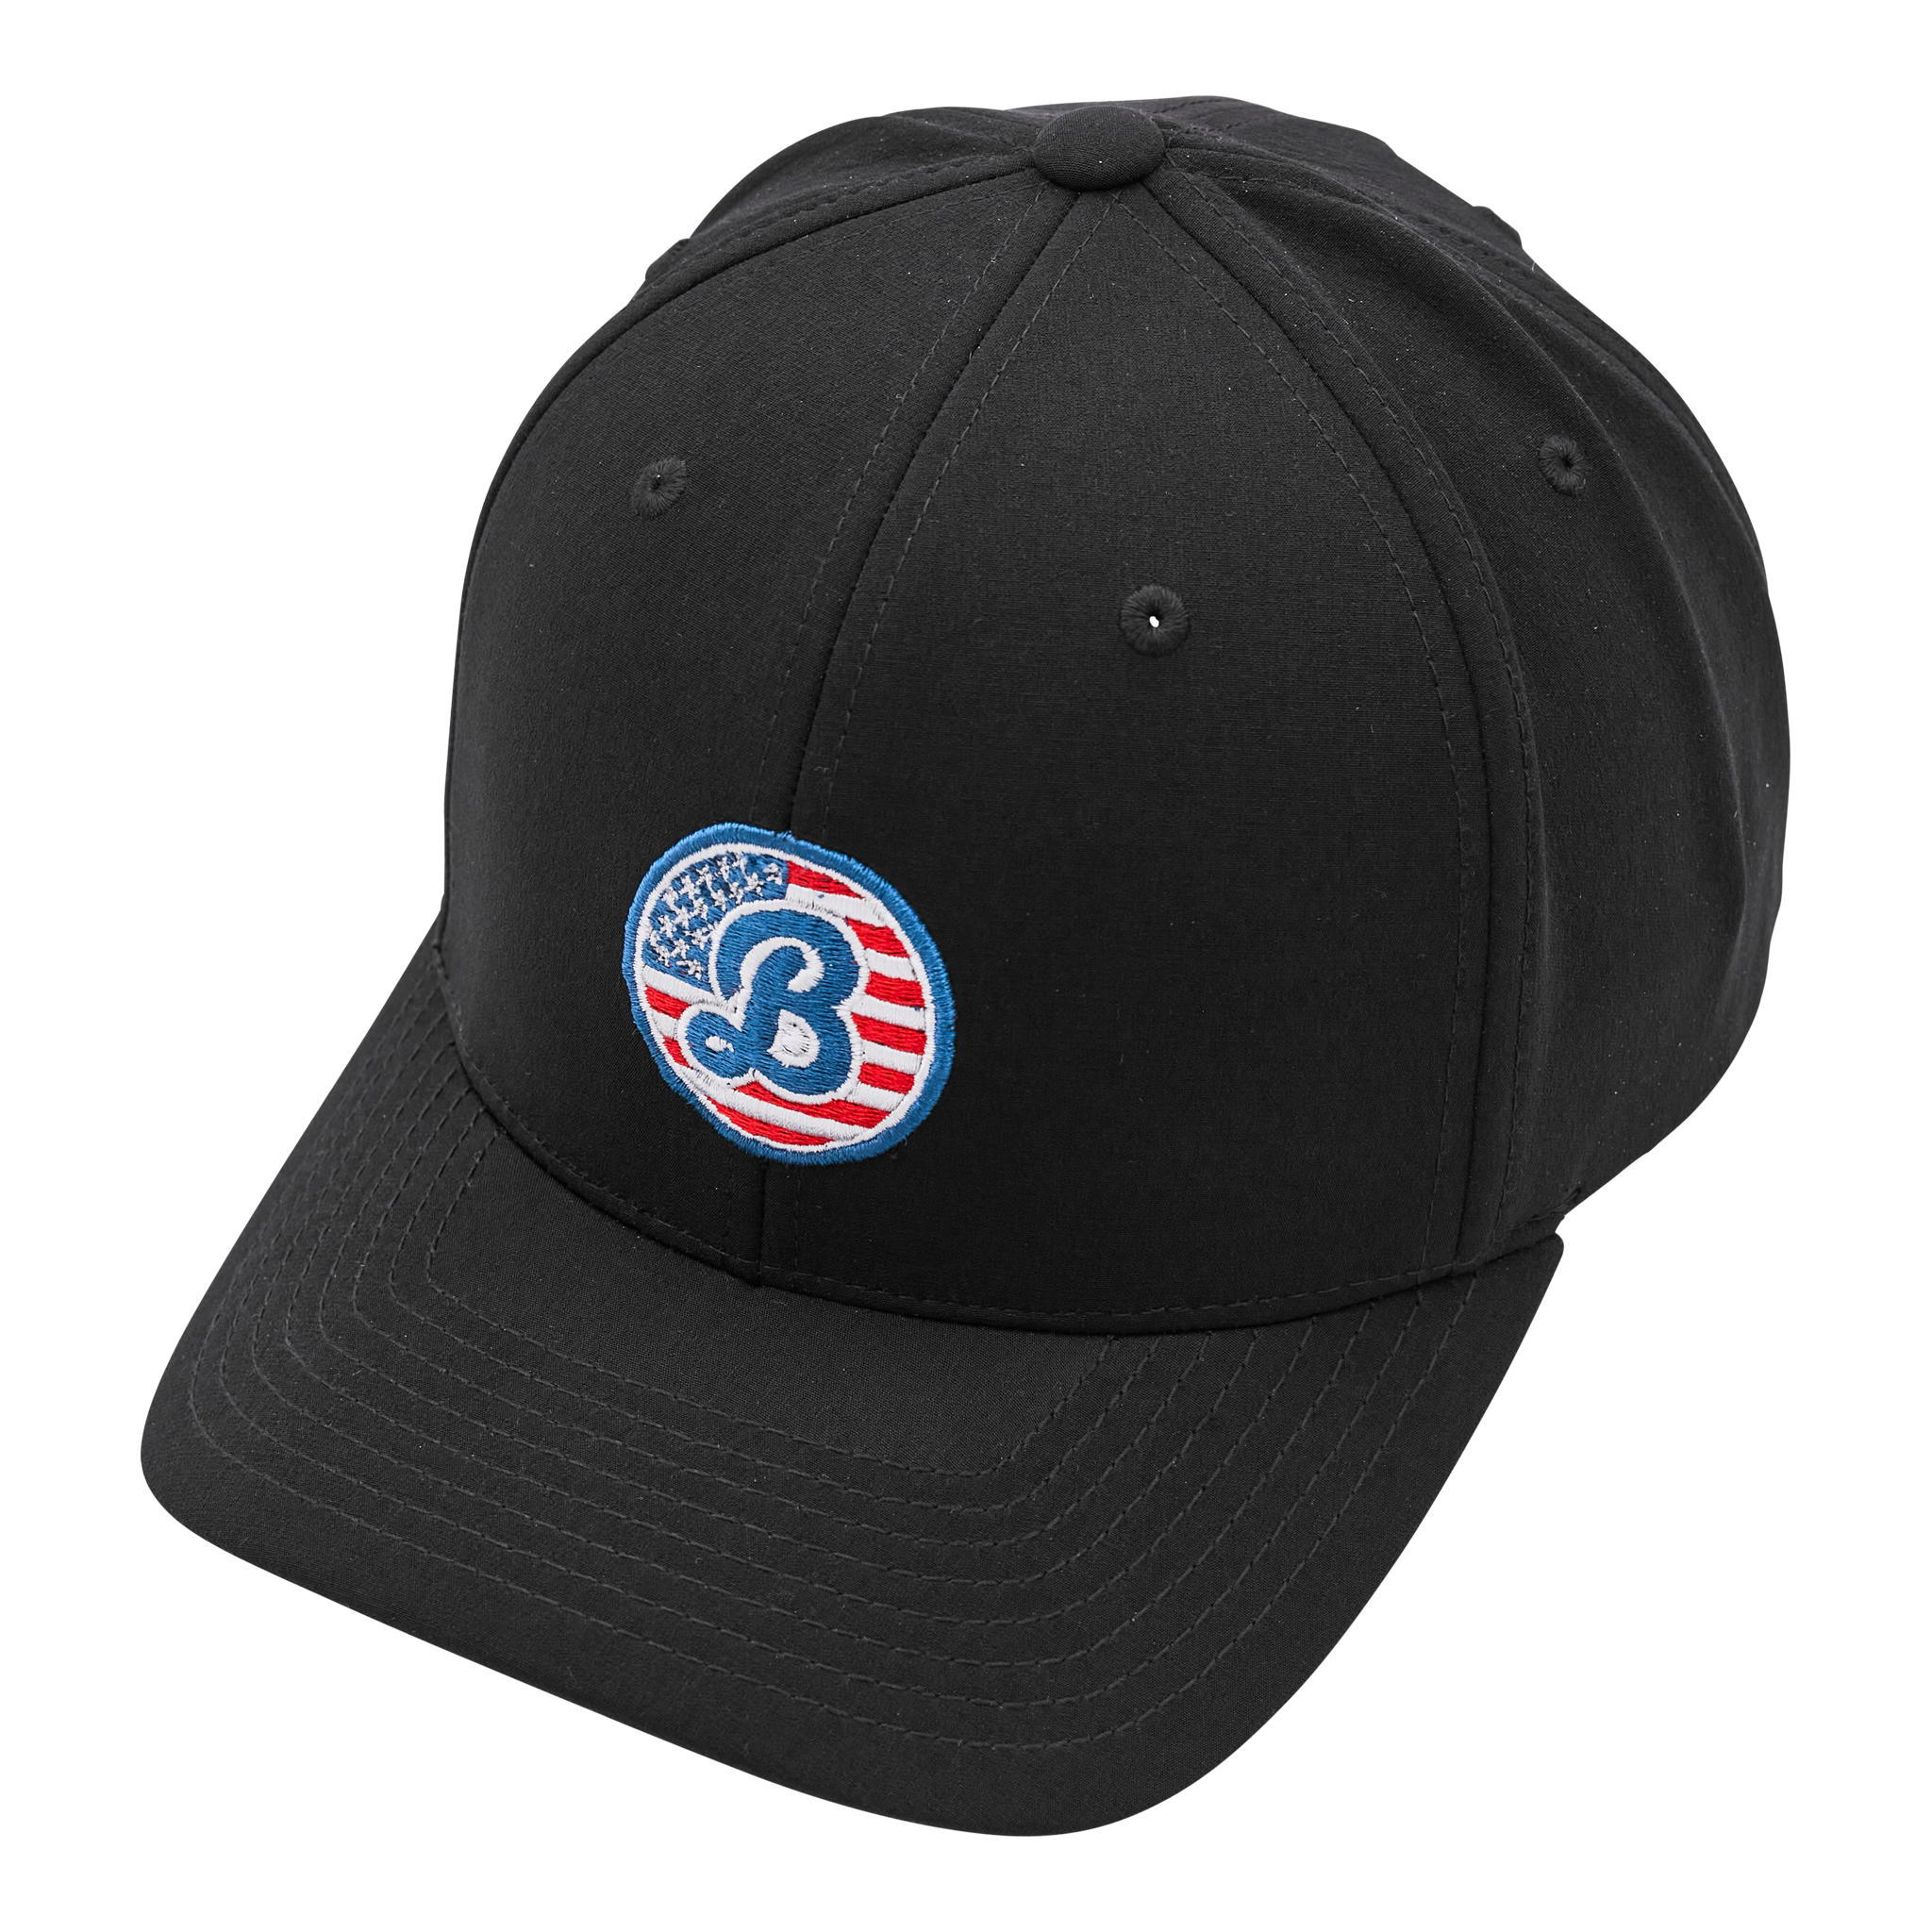 Bettinardi Americana Patch Black Fitted Performance Hat